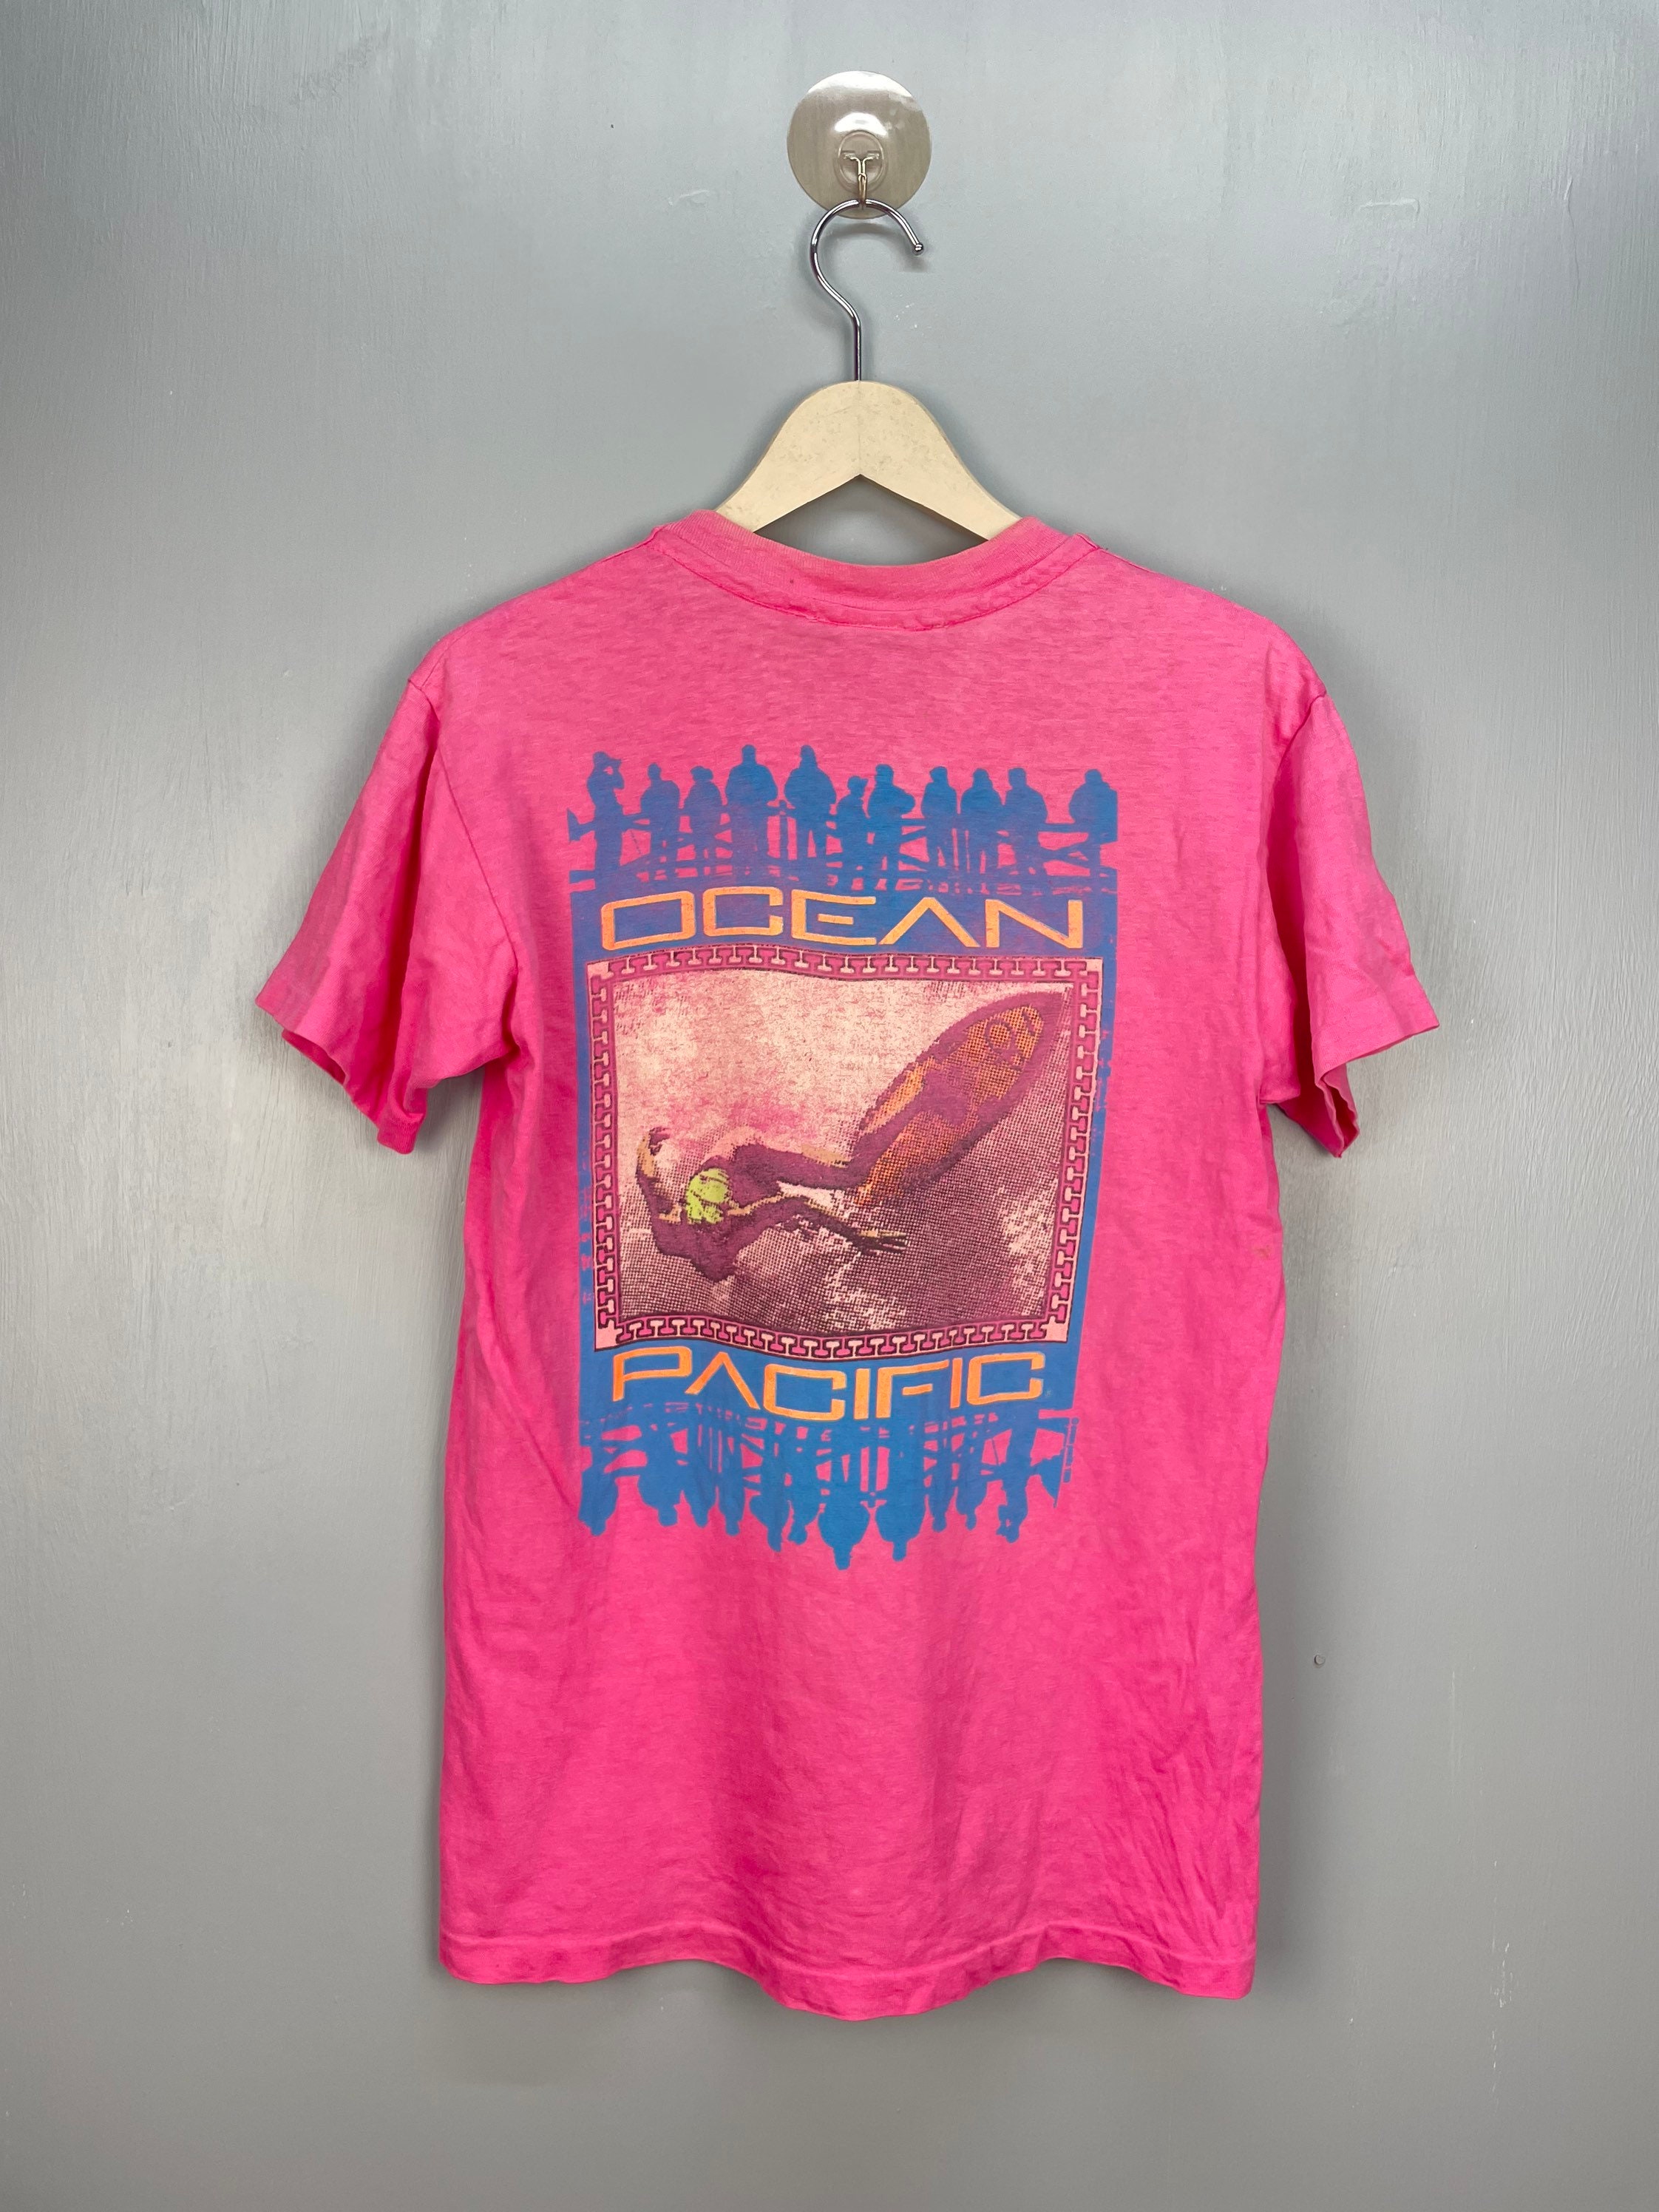 Ocean Pacific vintage surf T-shirt 90s-